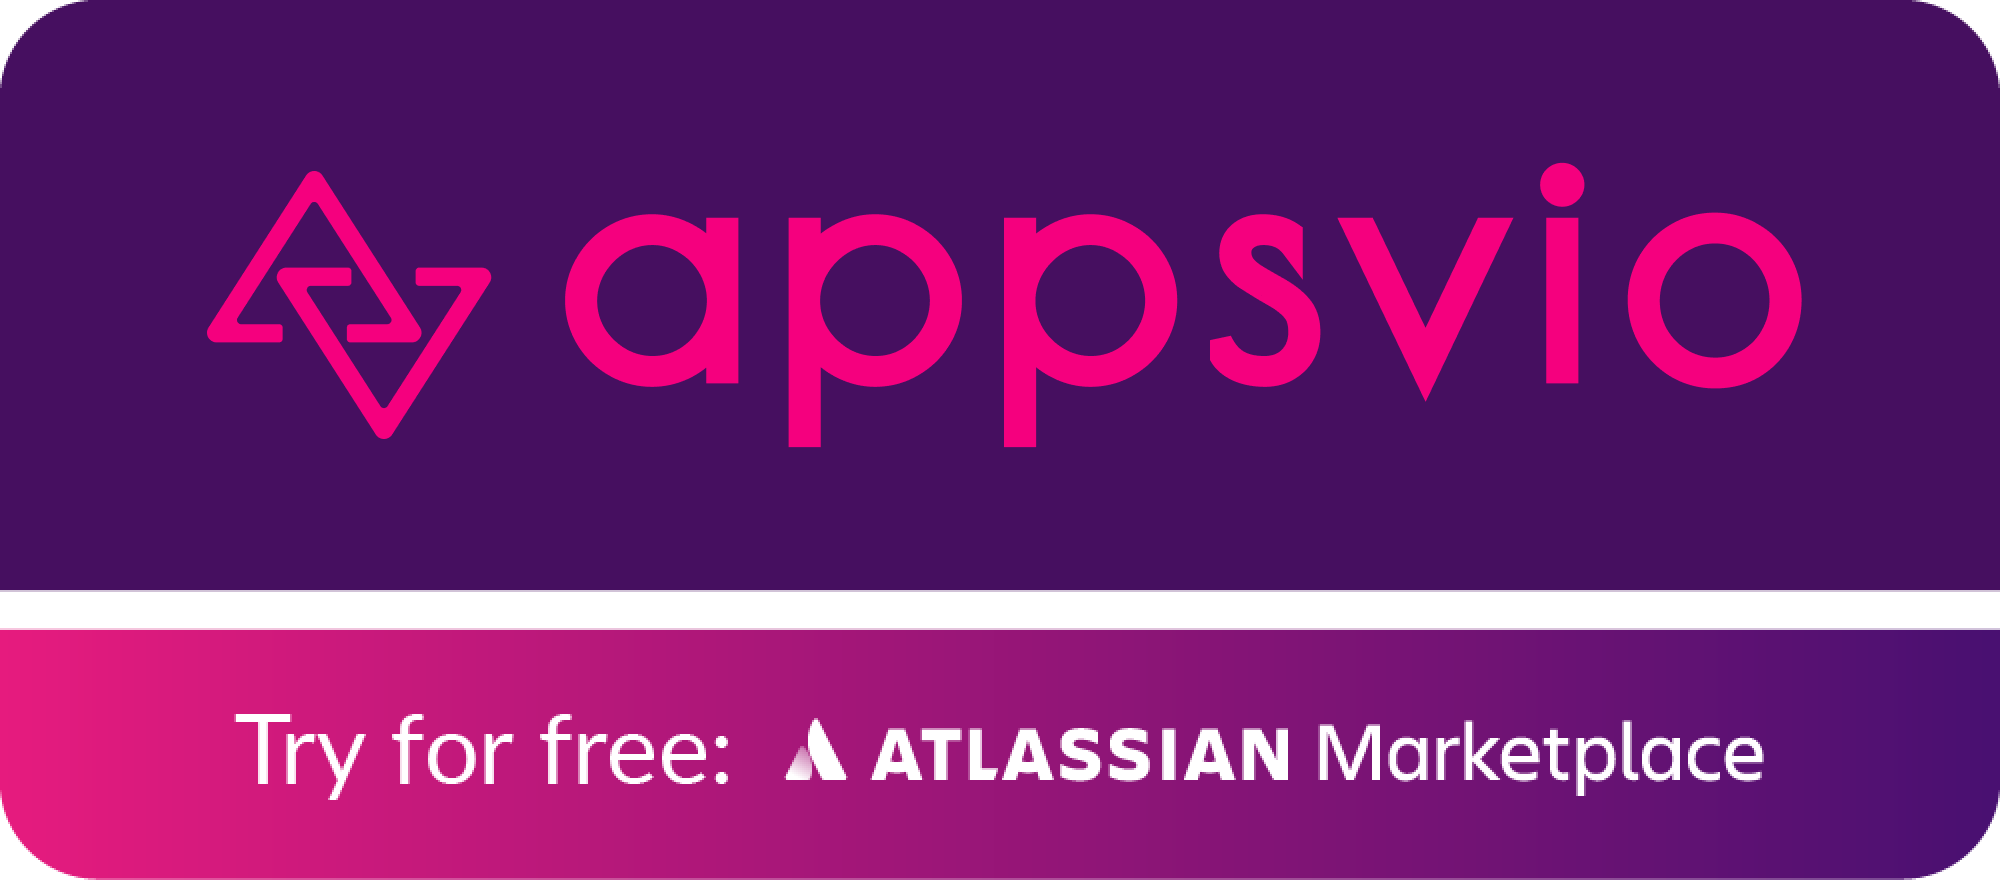 Appsvio Atlassian marketplace